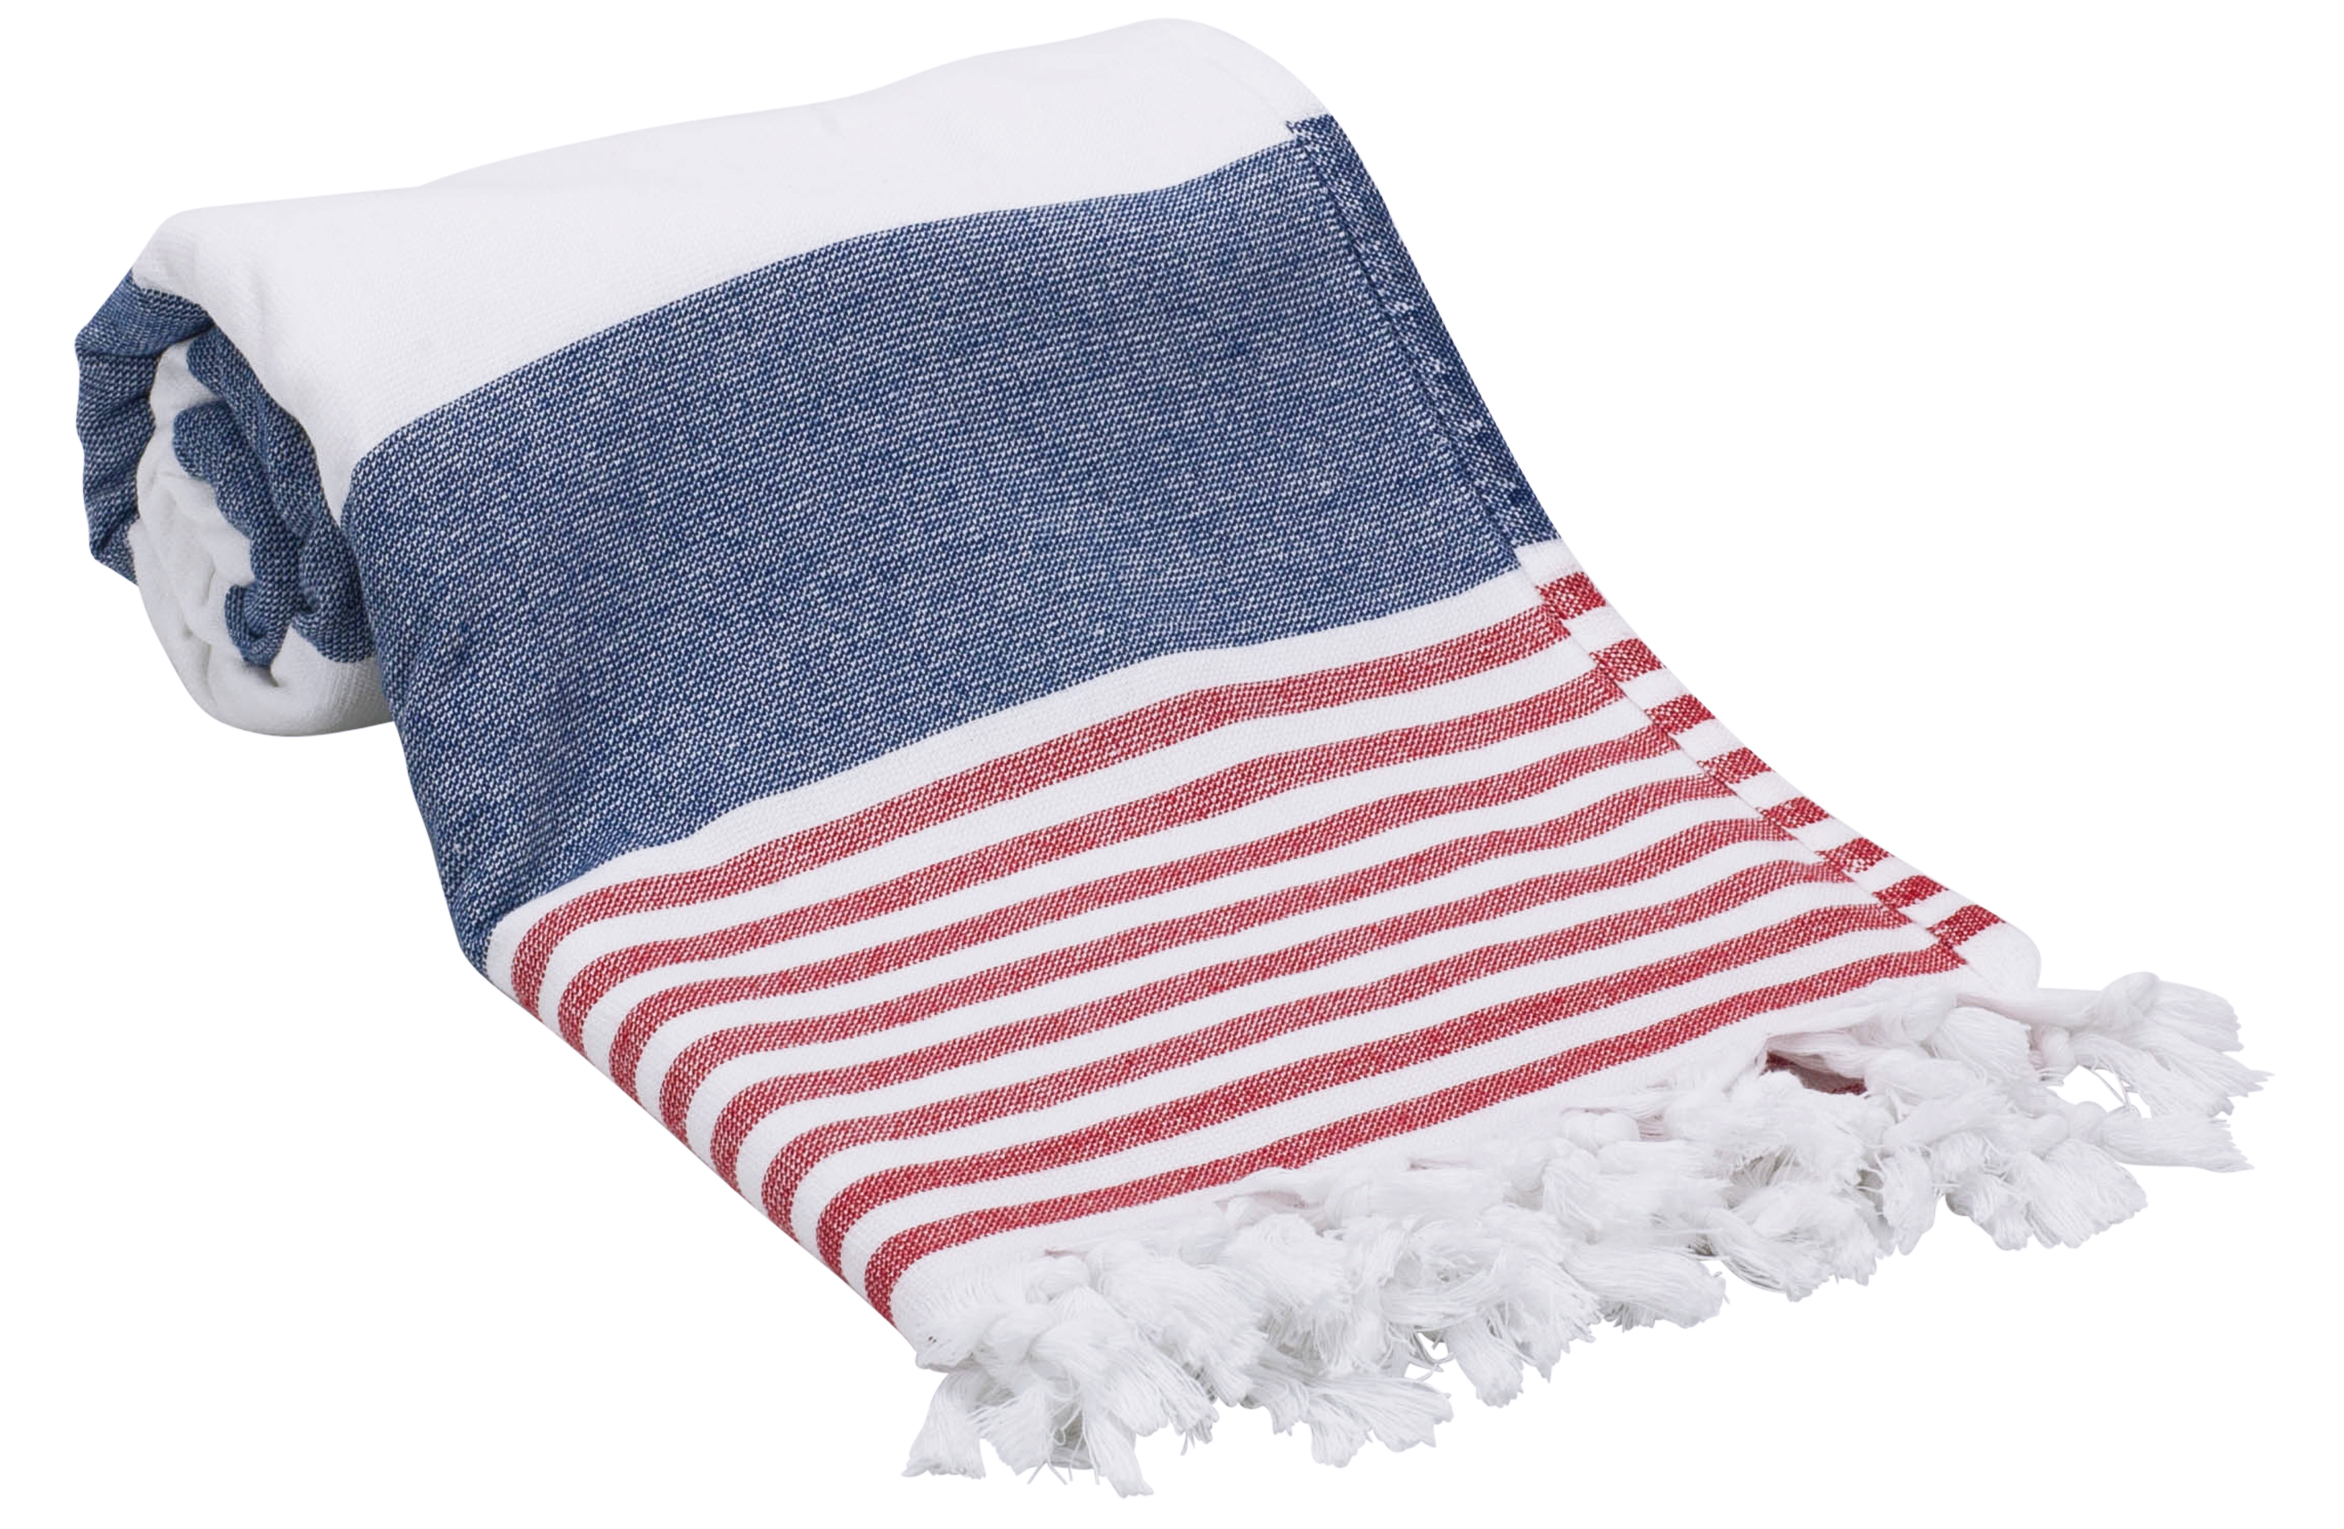 Swan Comfort Bath & Resort Beach Towel, %100 Cotton Peshtemal, Pool, Spa, Sauna, Hot Yoga Towel (Double Sided) Various Colors - ( Navy - Red ) - image 3 of 3